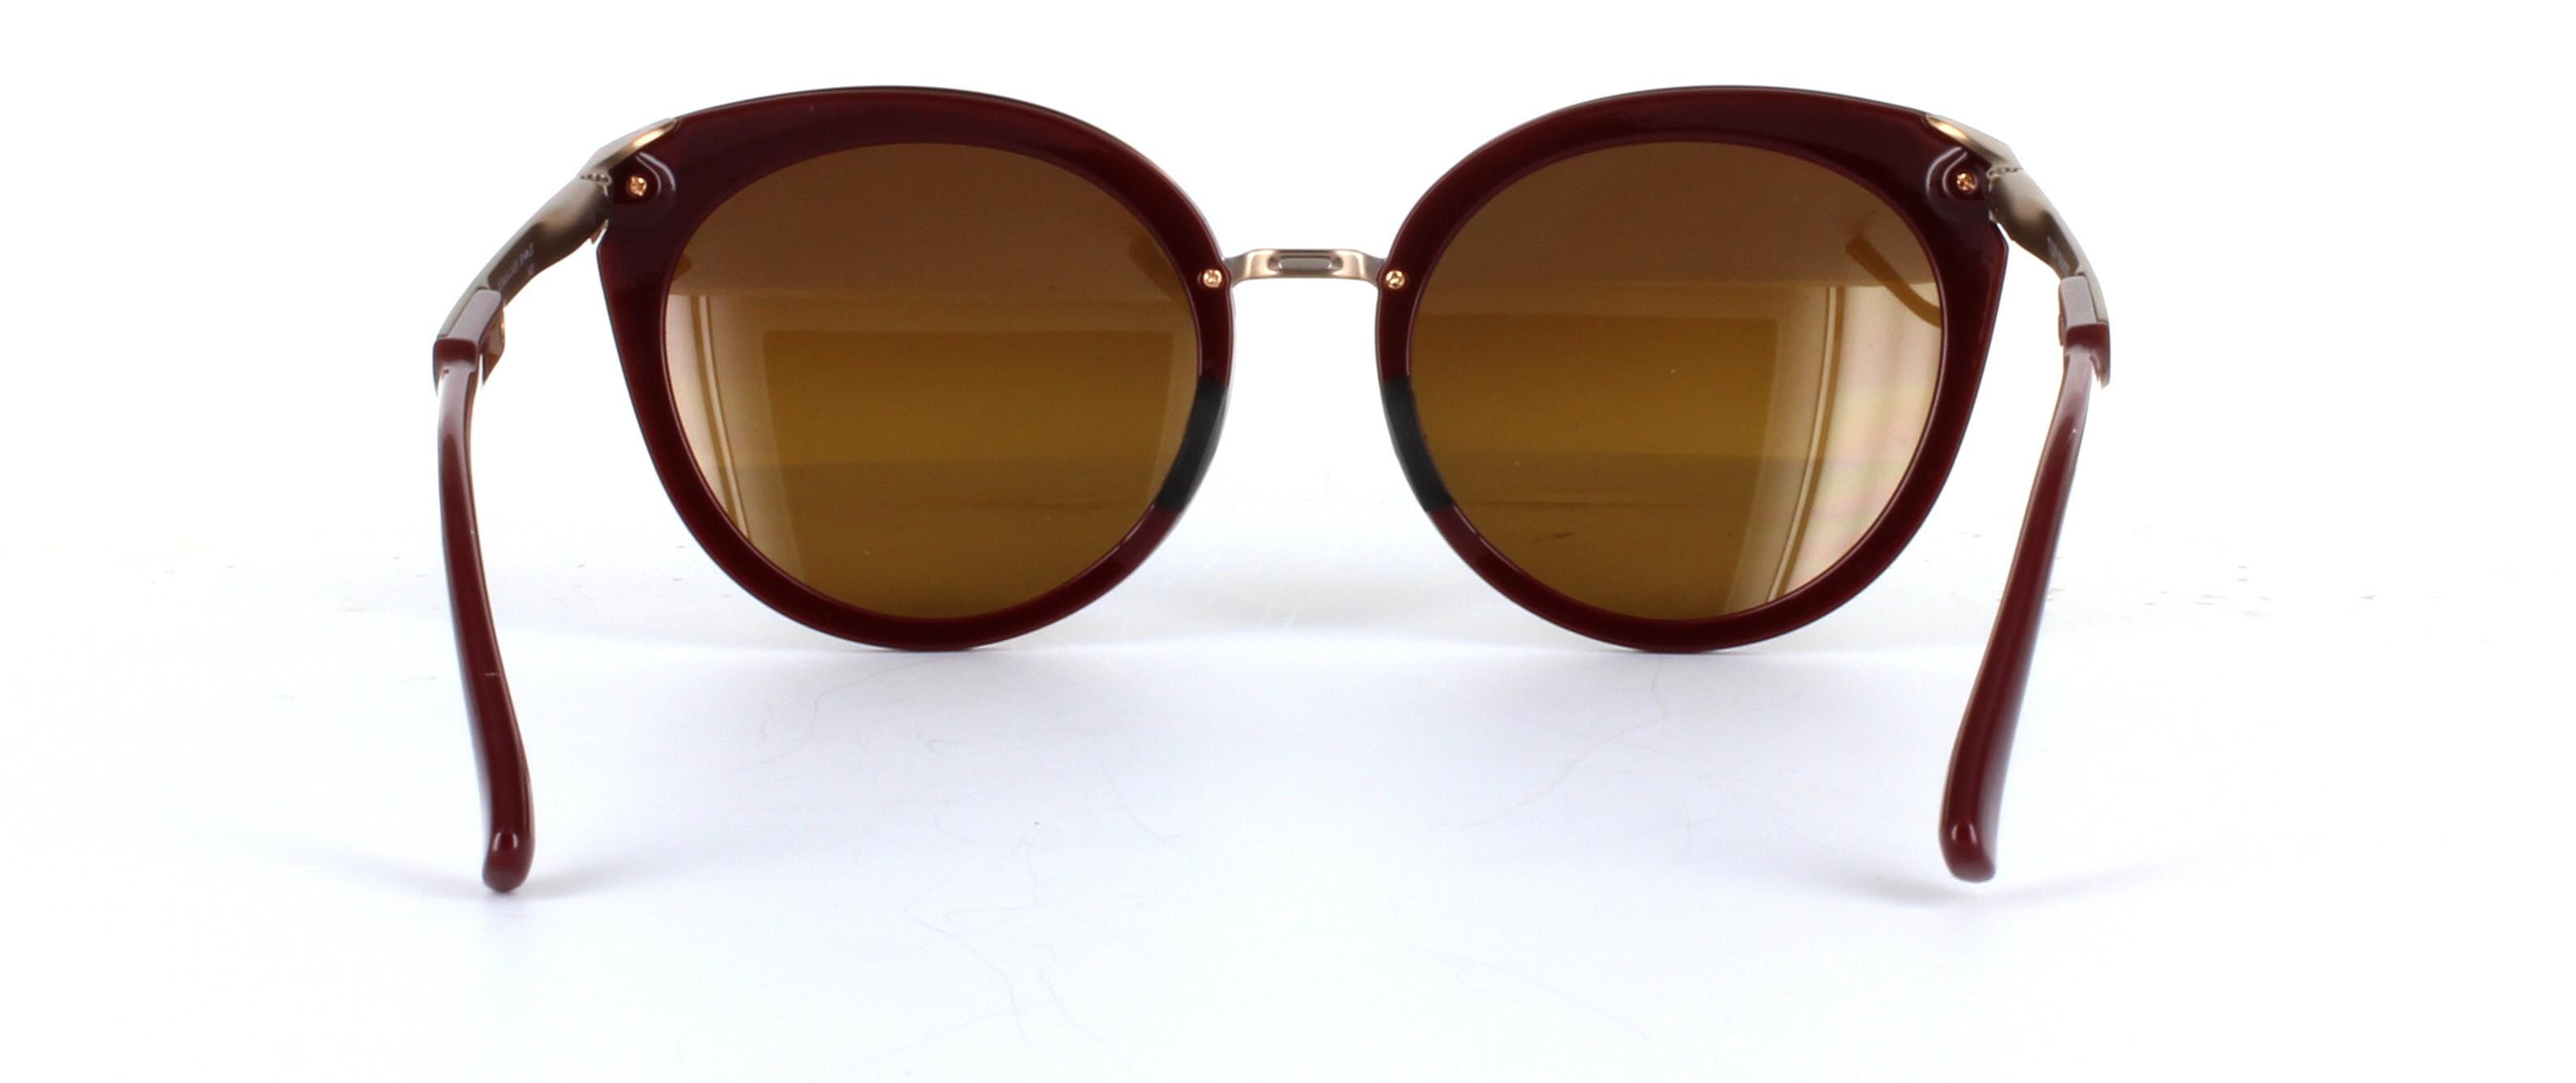 Oakley (O9434) Burgundy Full Rim Plastic Prescription Sunglasses - Image View 3